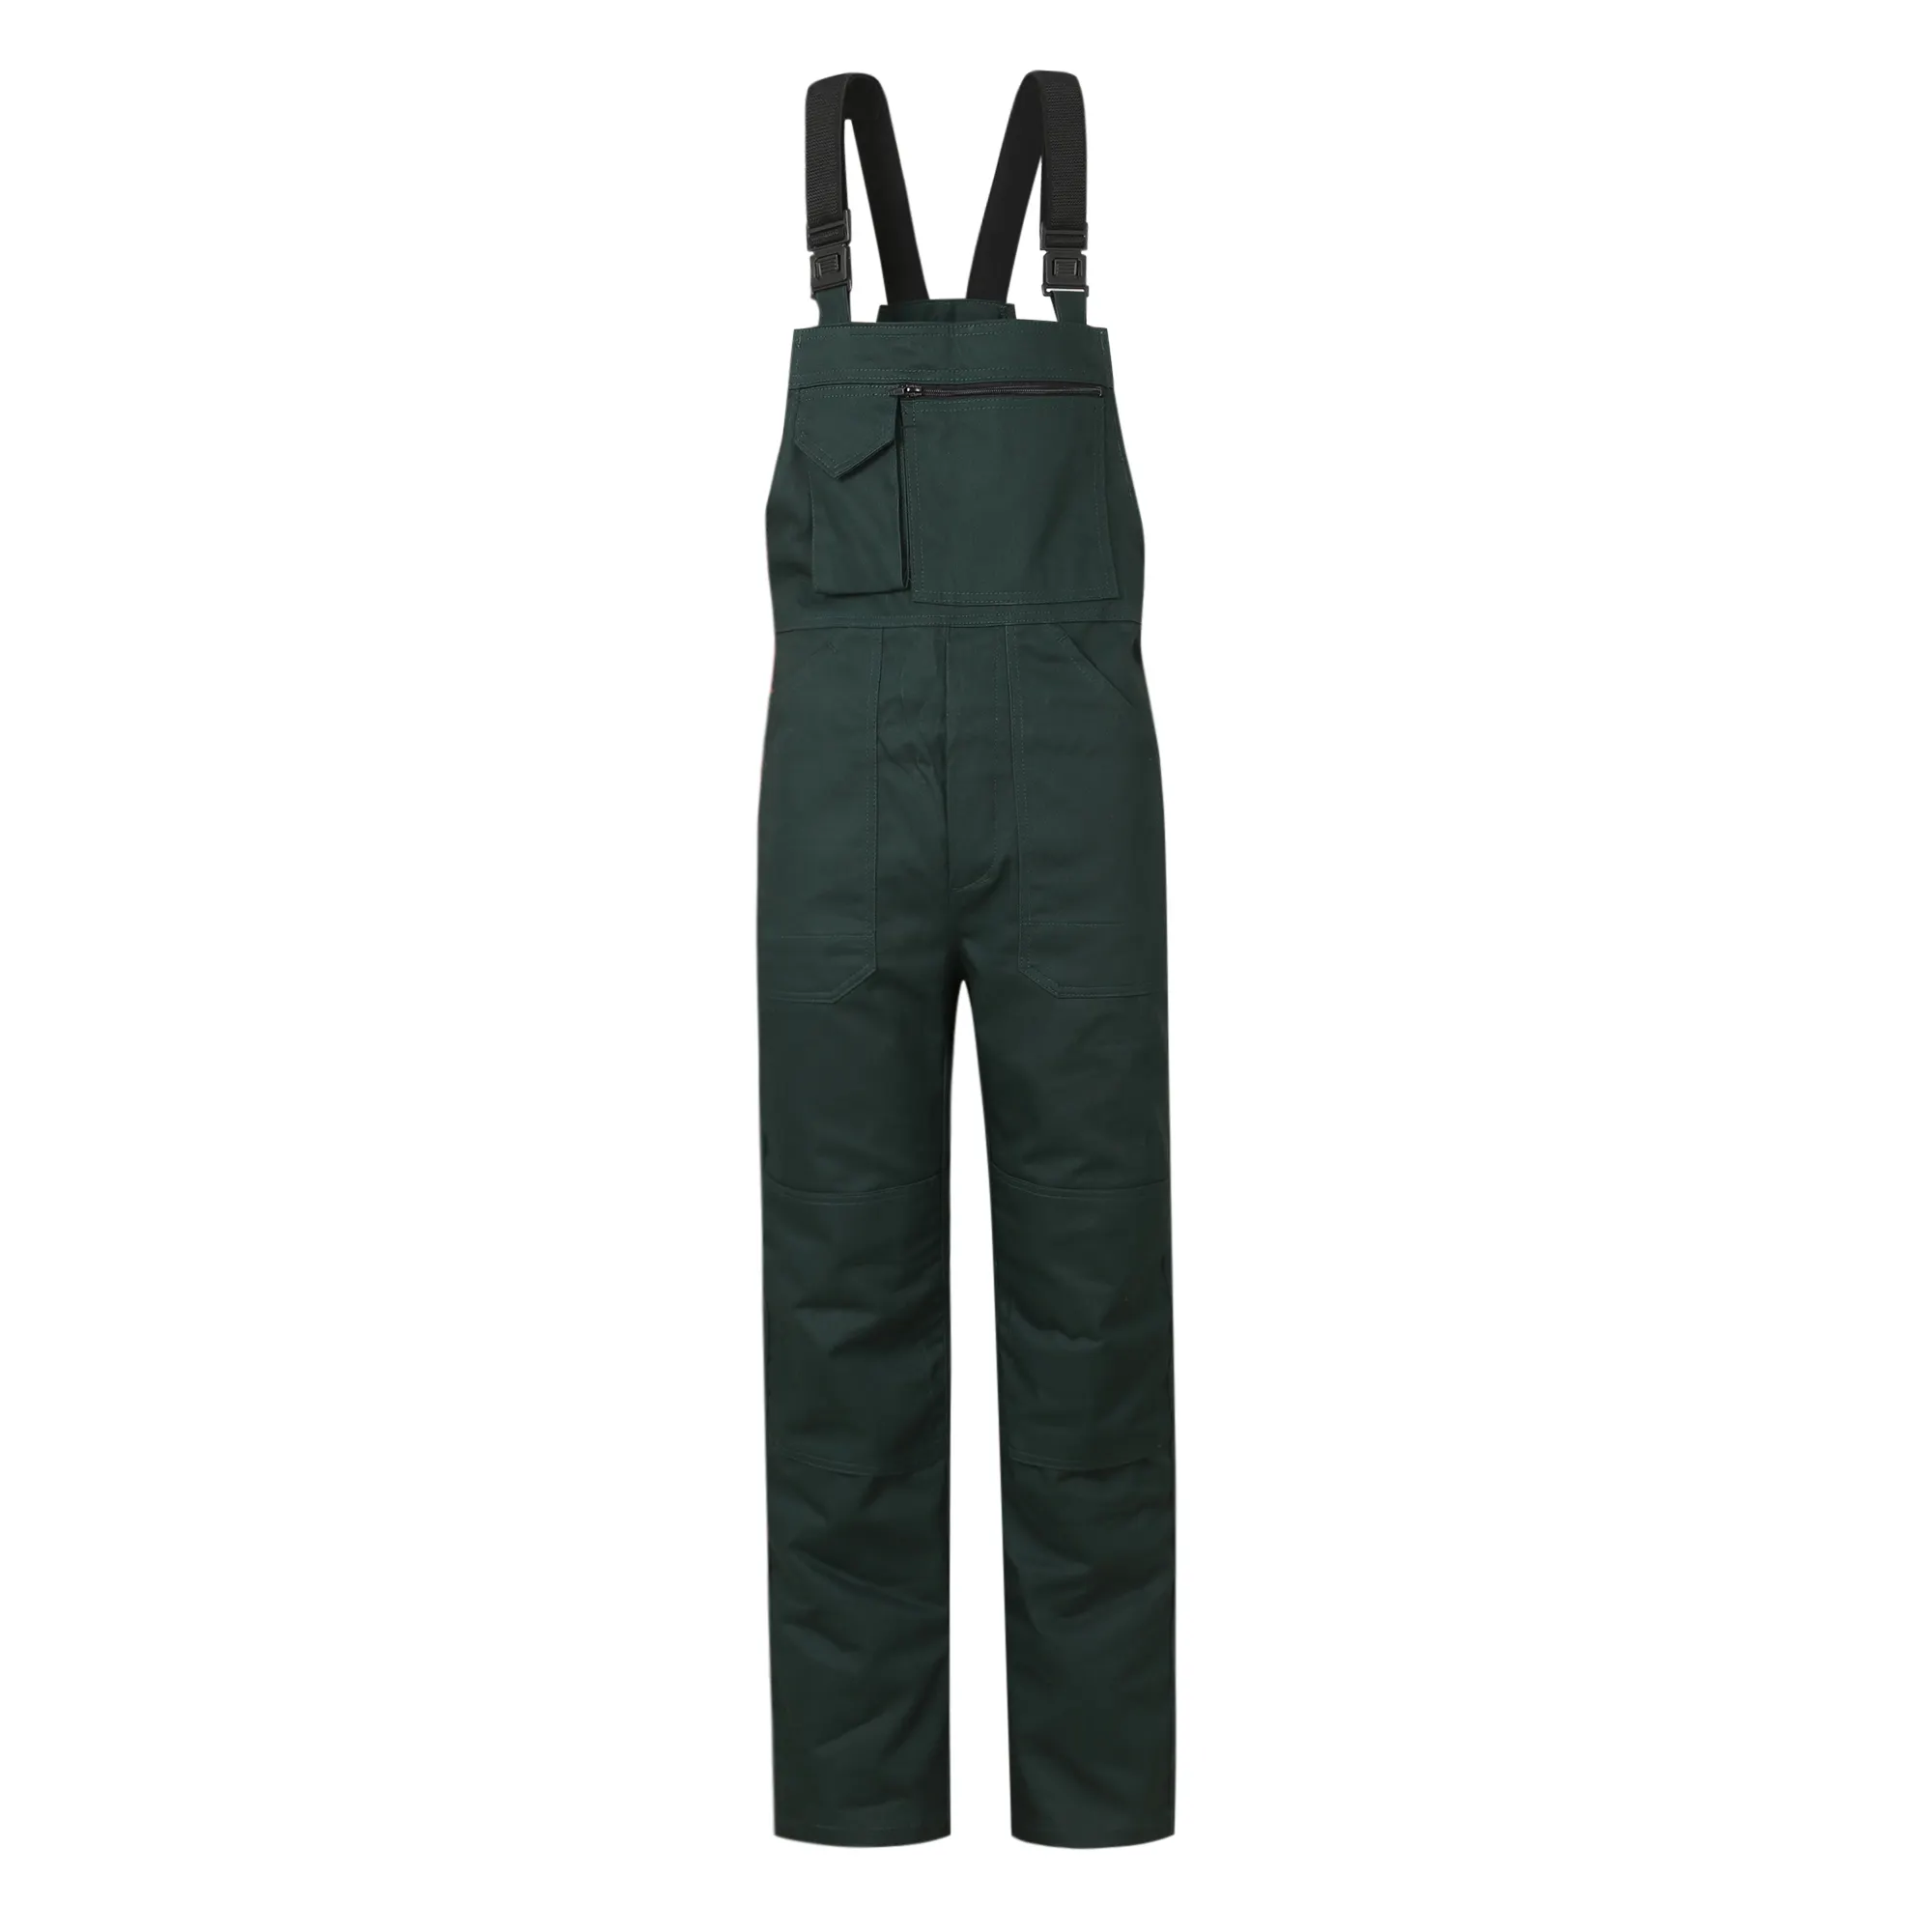 OEM custom logo top quality outer work wear uniform spring or autumn cultivation pocket plain cargo pants